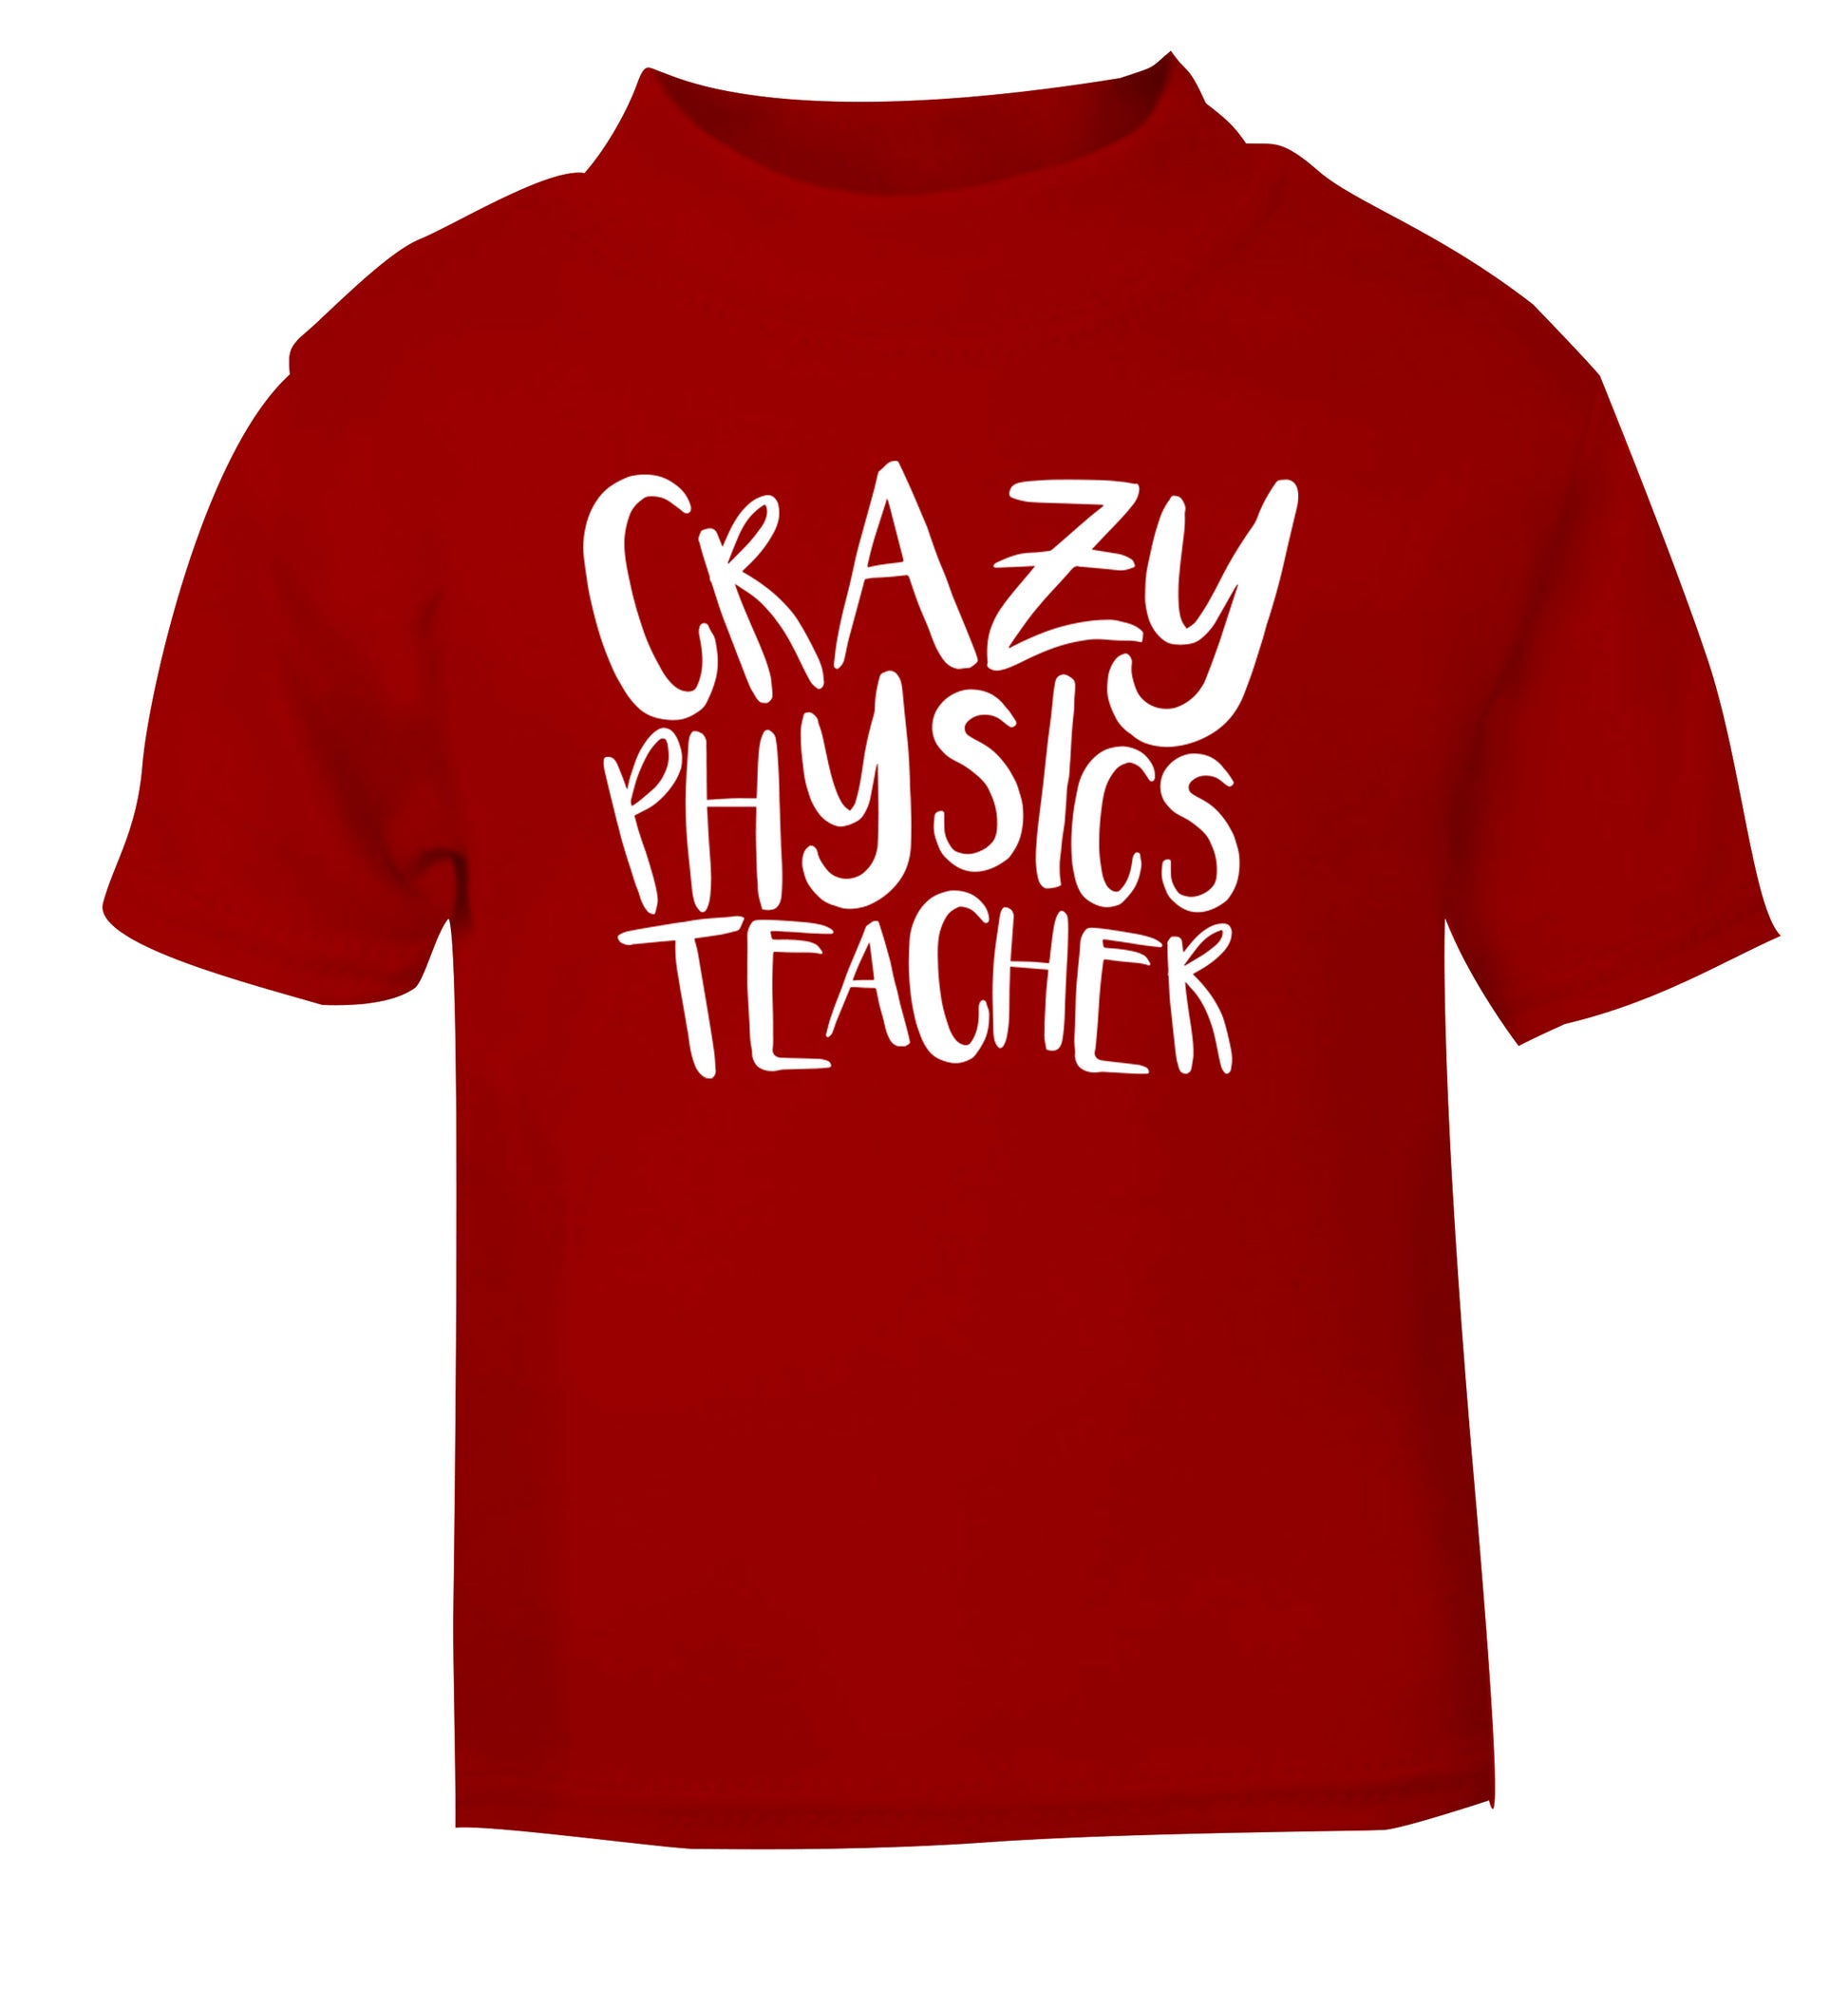 Crazy physics teacher red Baby Toddler Tshirt 2 Years